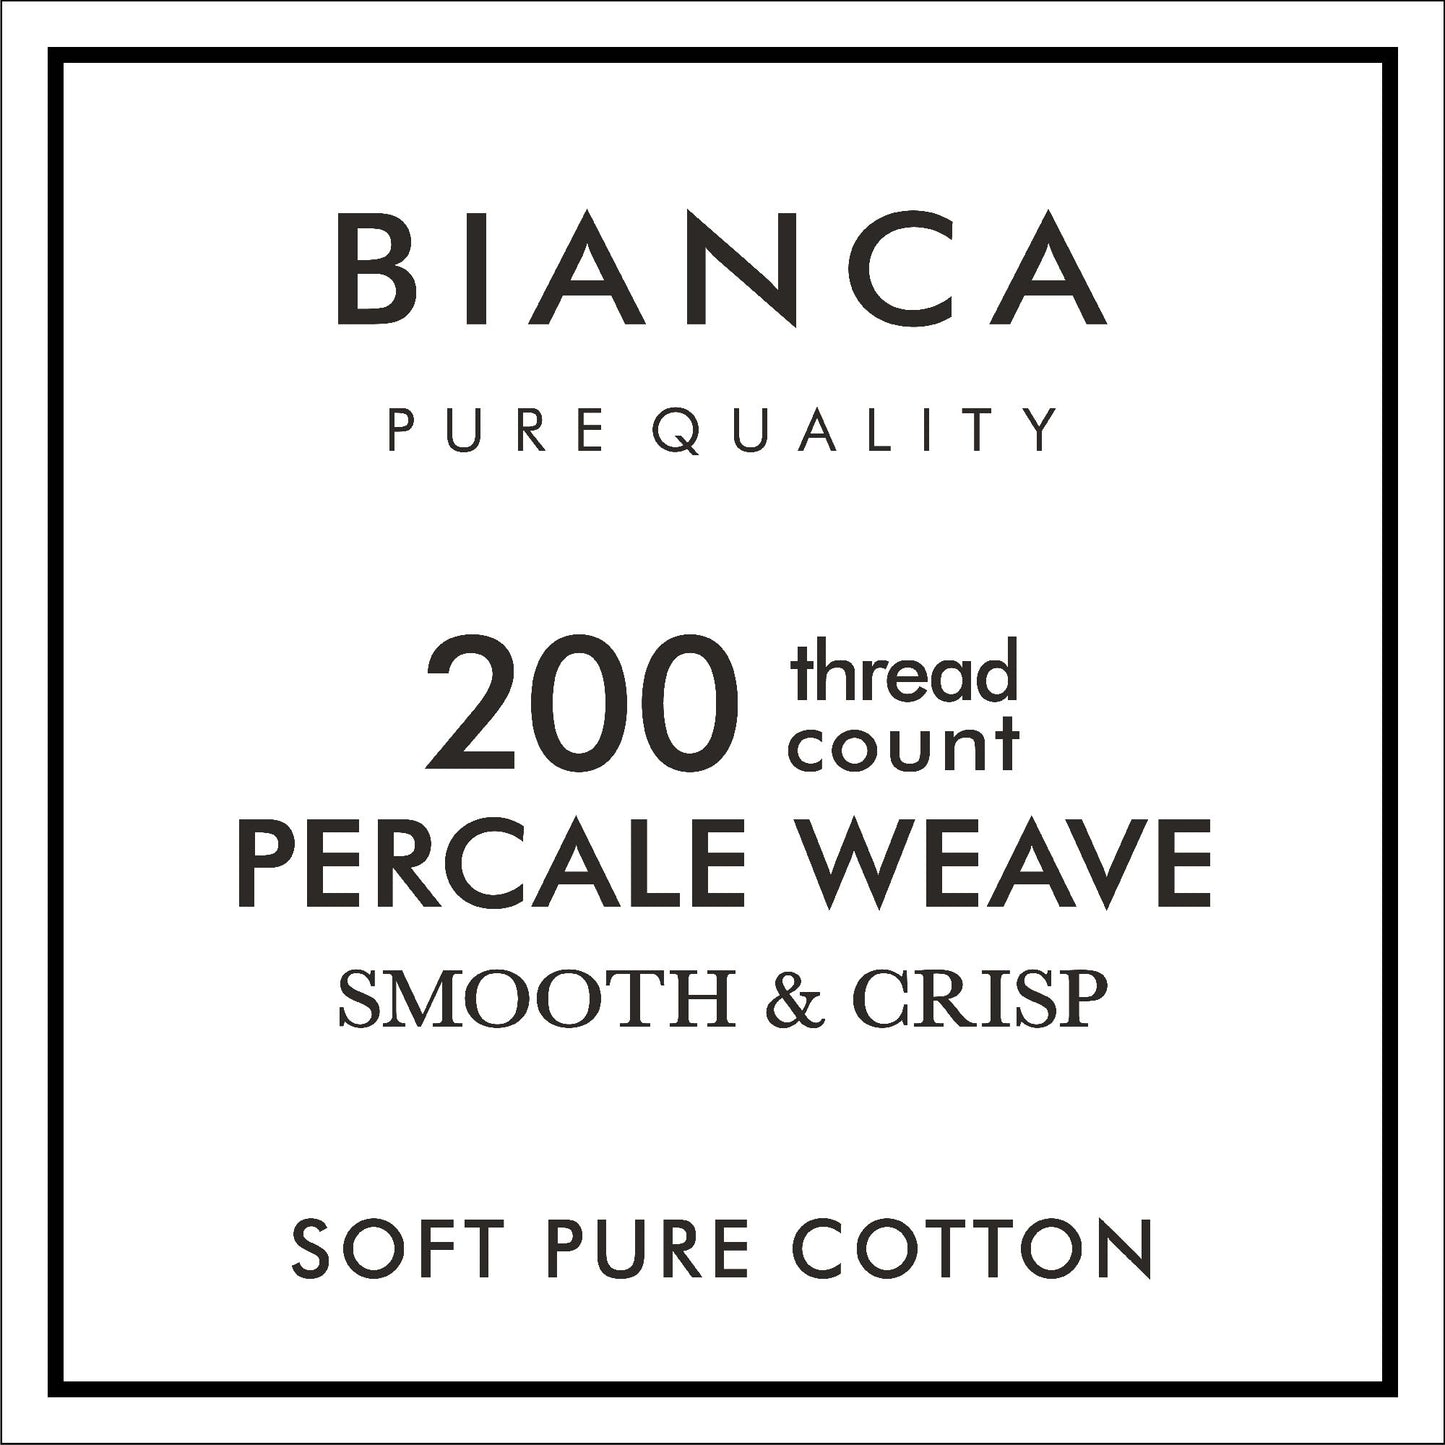 Bianca Blue 200TC 100% Cotton Percale Housewife Pillowcase Pair